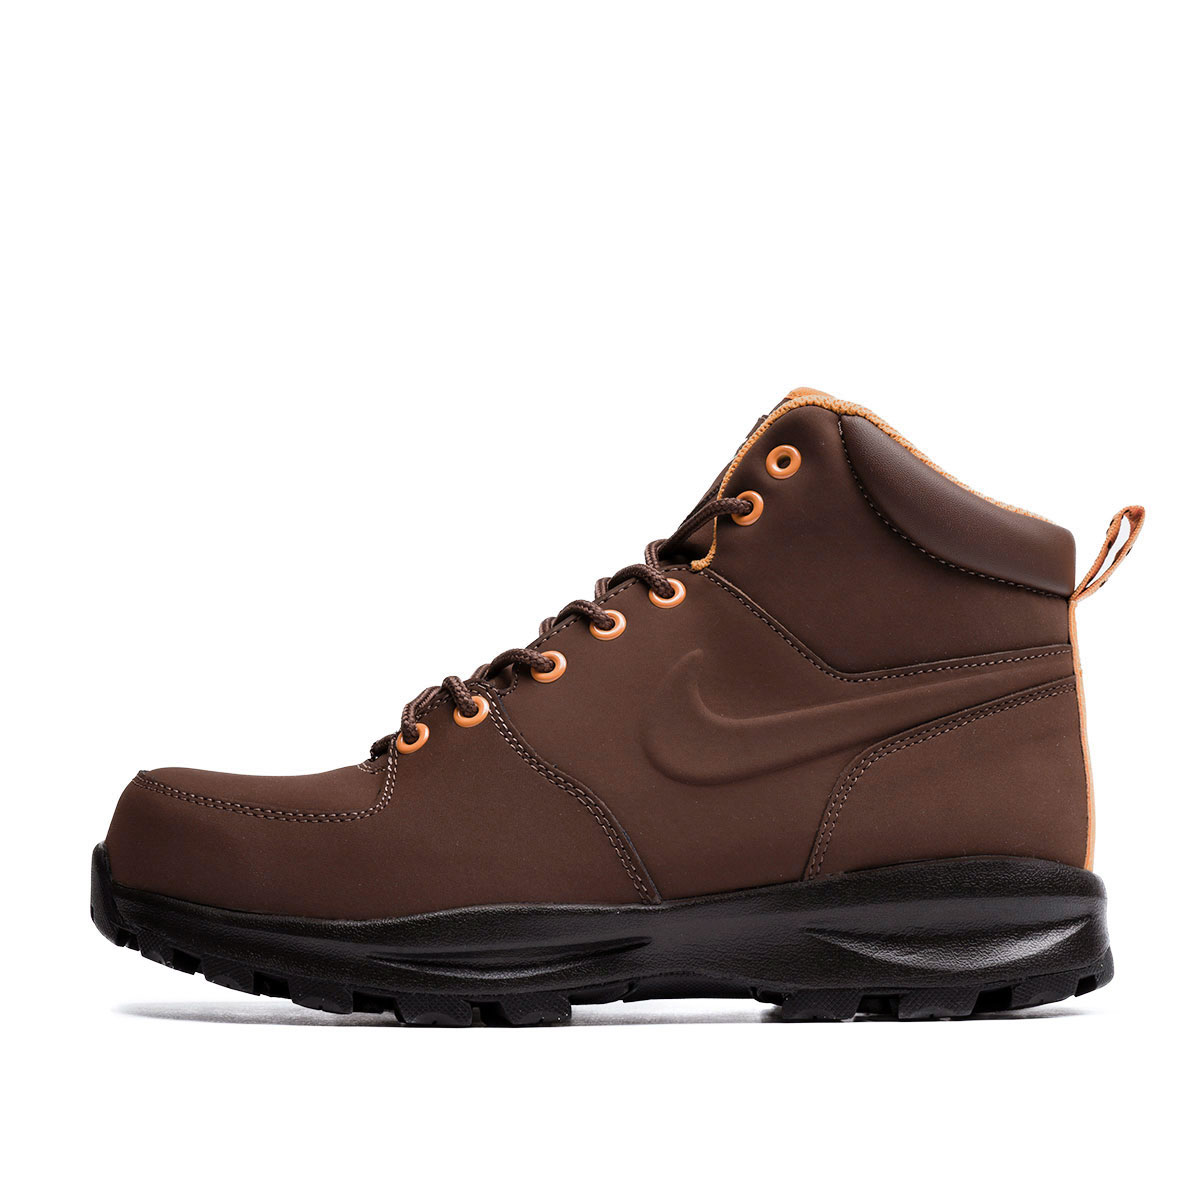 Nike Manoa Leather  TTR454350-203